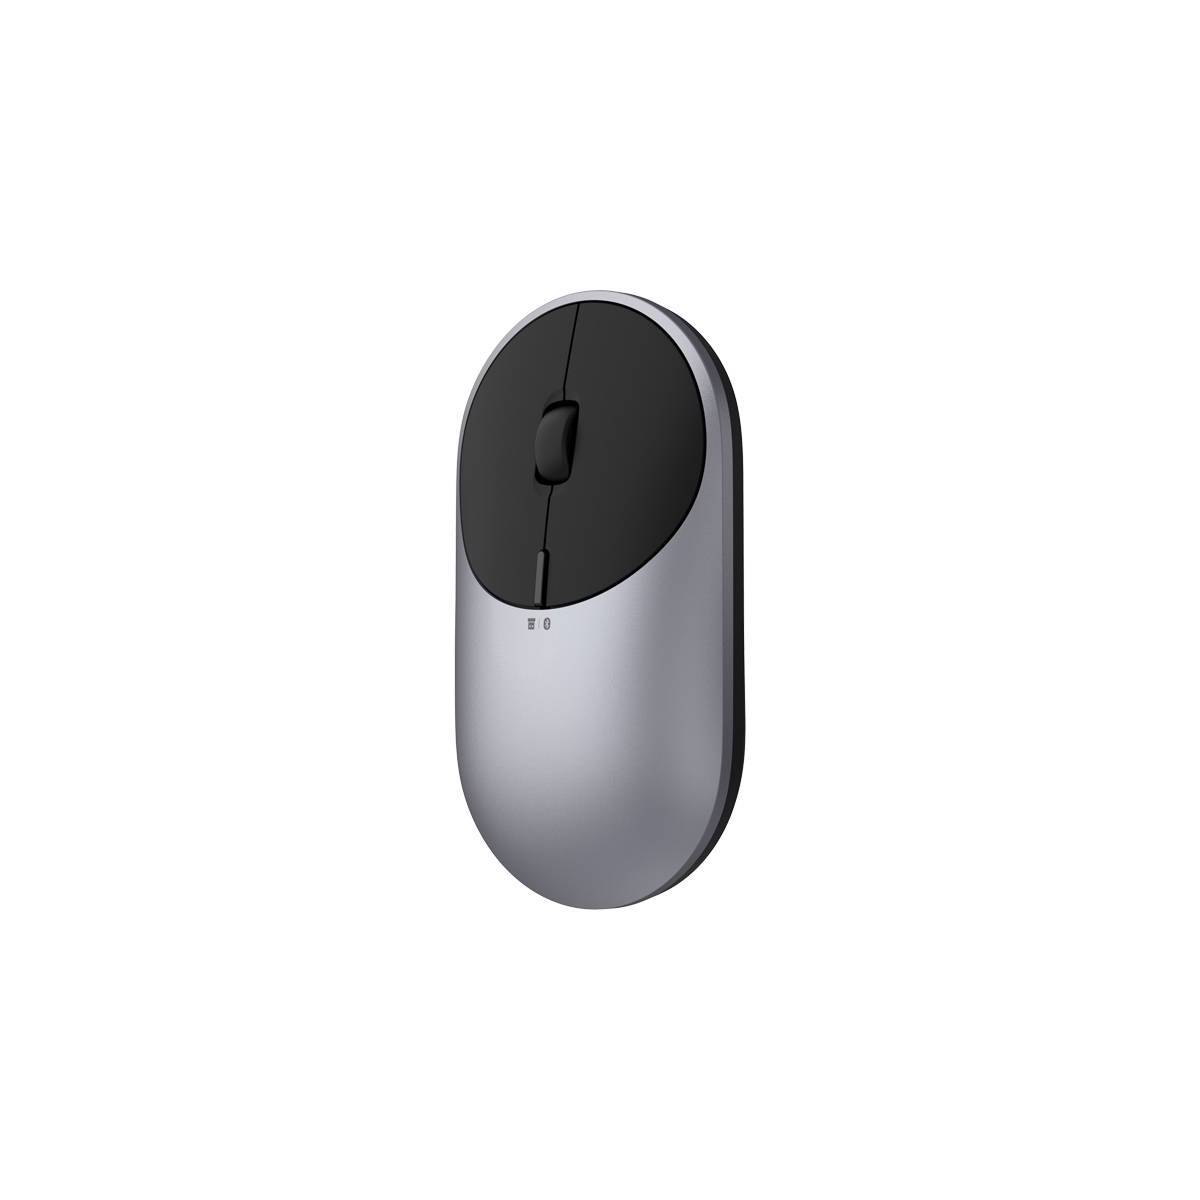 kontoførende spørgeskema Grundig Xiaomi mi mouse Bluetooth 4.2 trådløs mus - Space gray